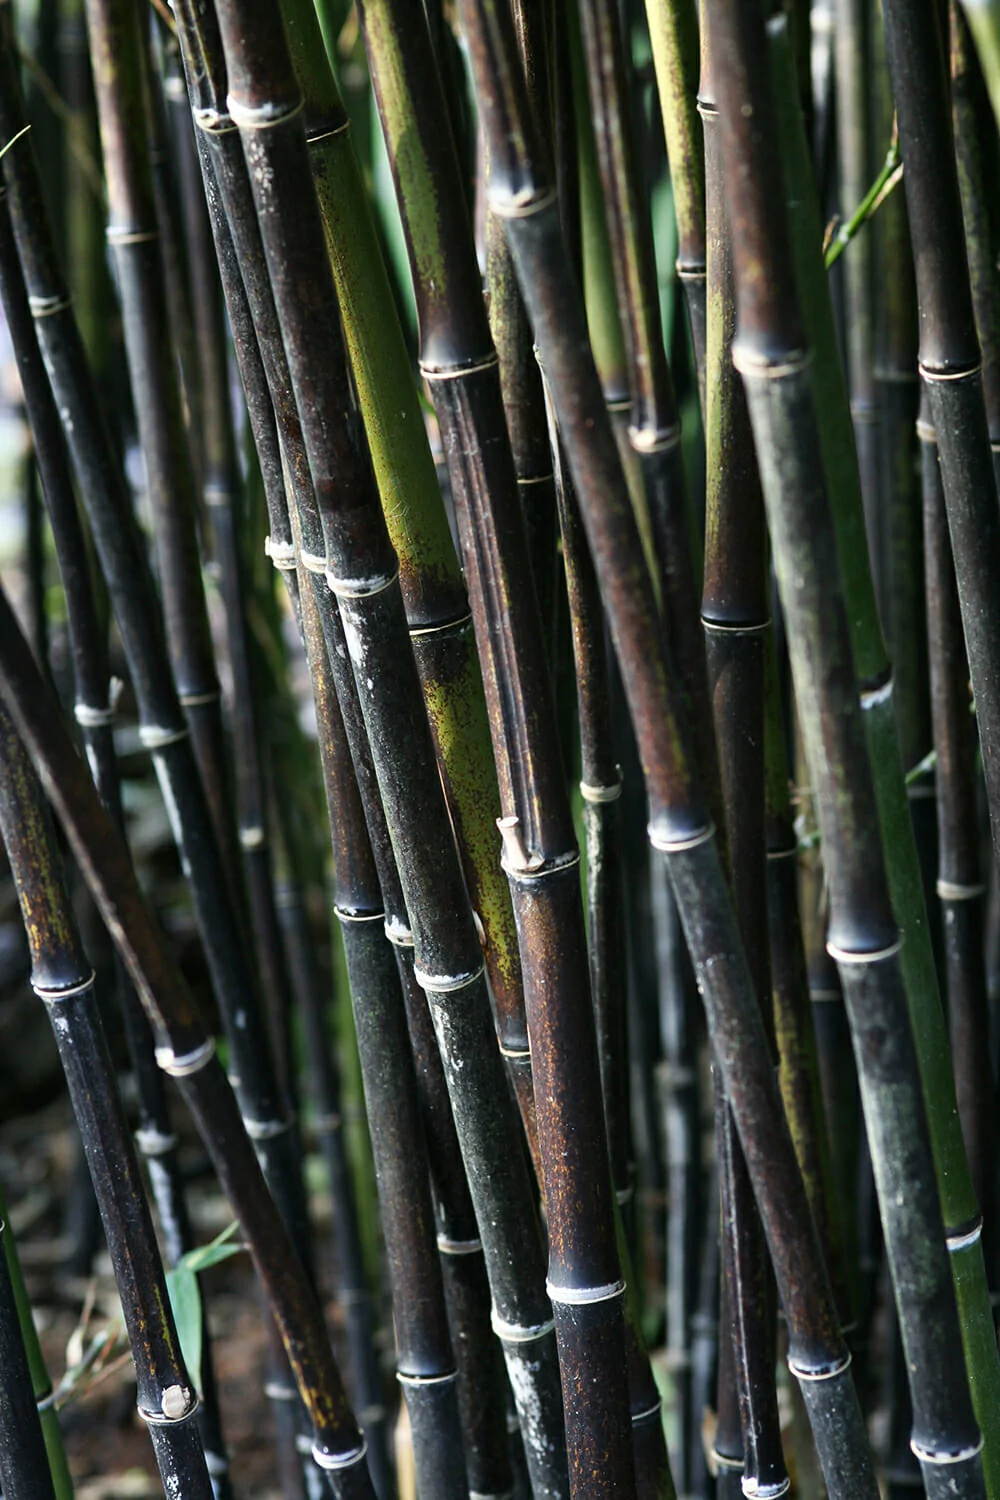 Edible Organic Black Bamboo Charcoal Powder